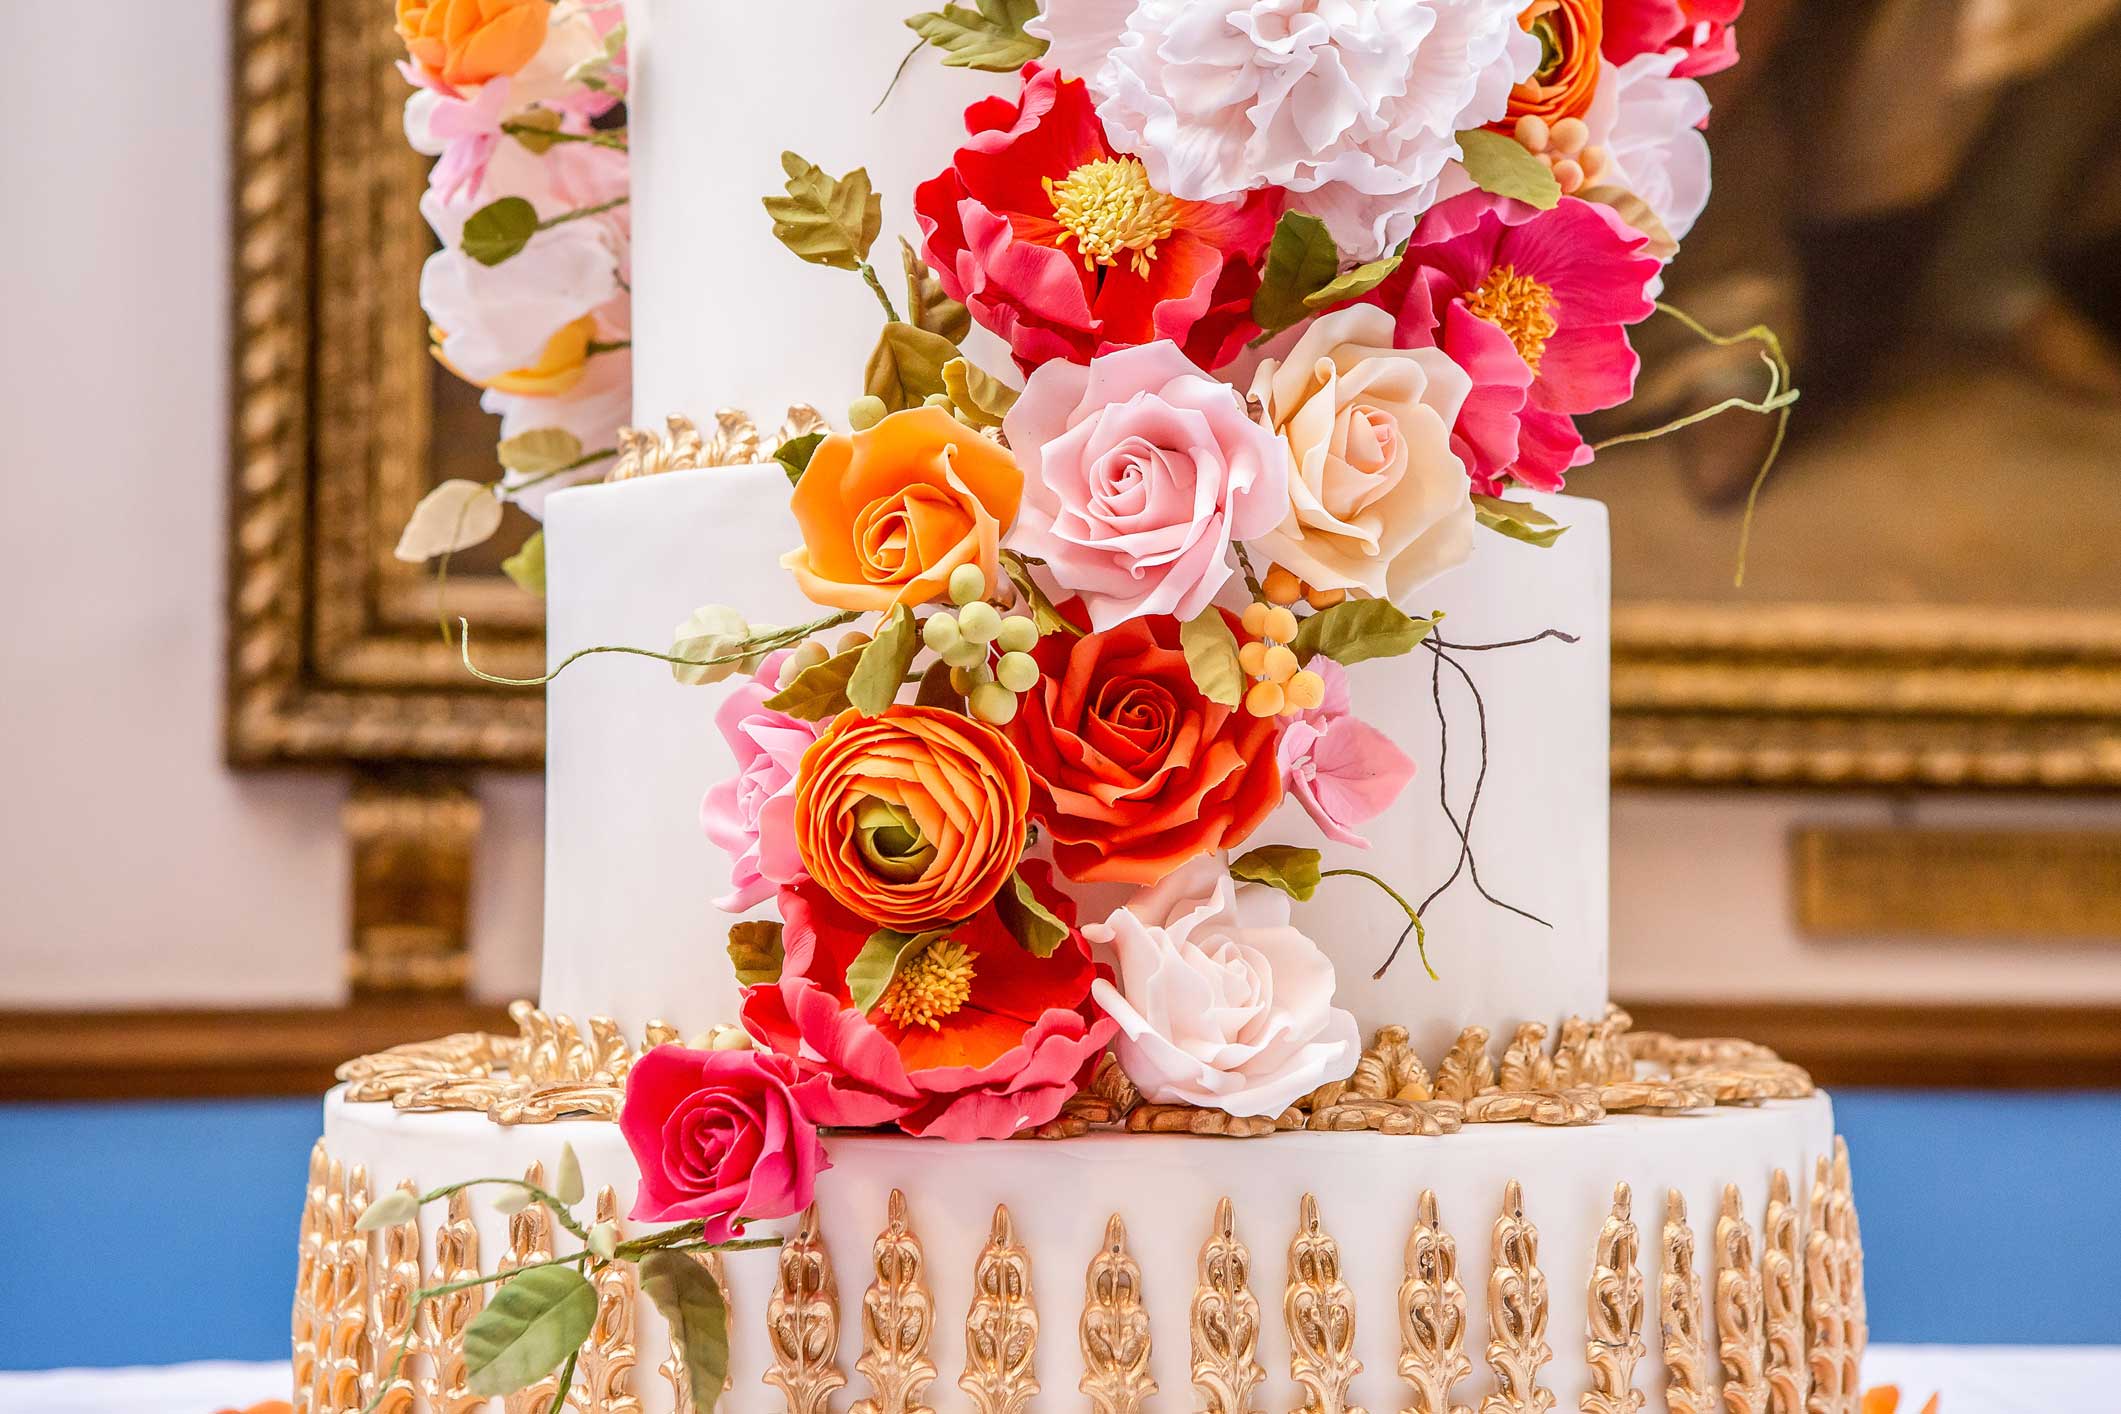 stationershall-wedding-cake4